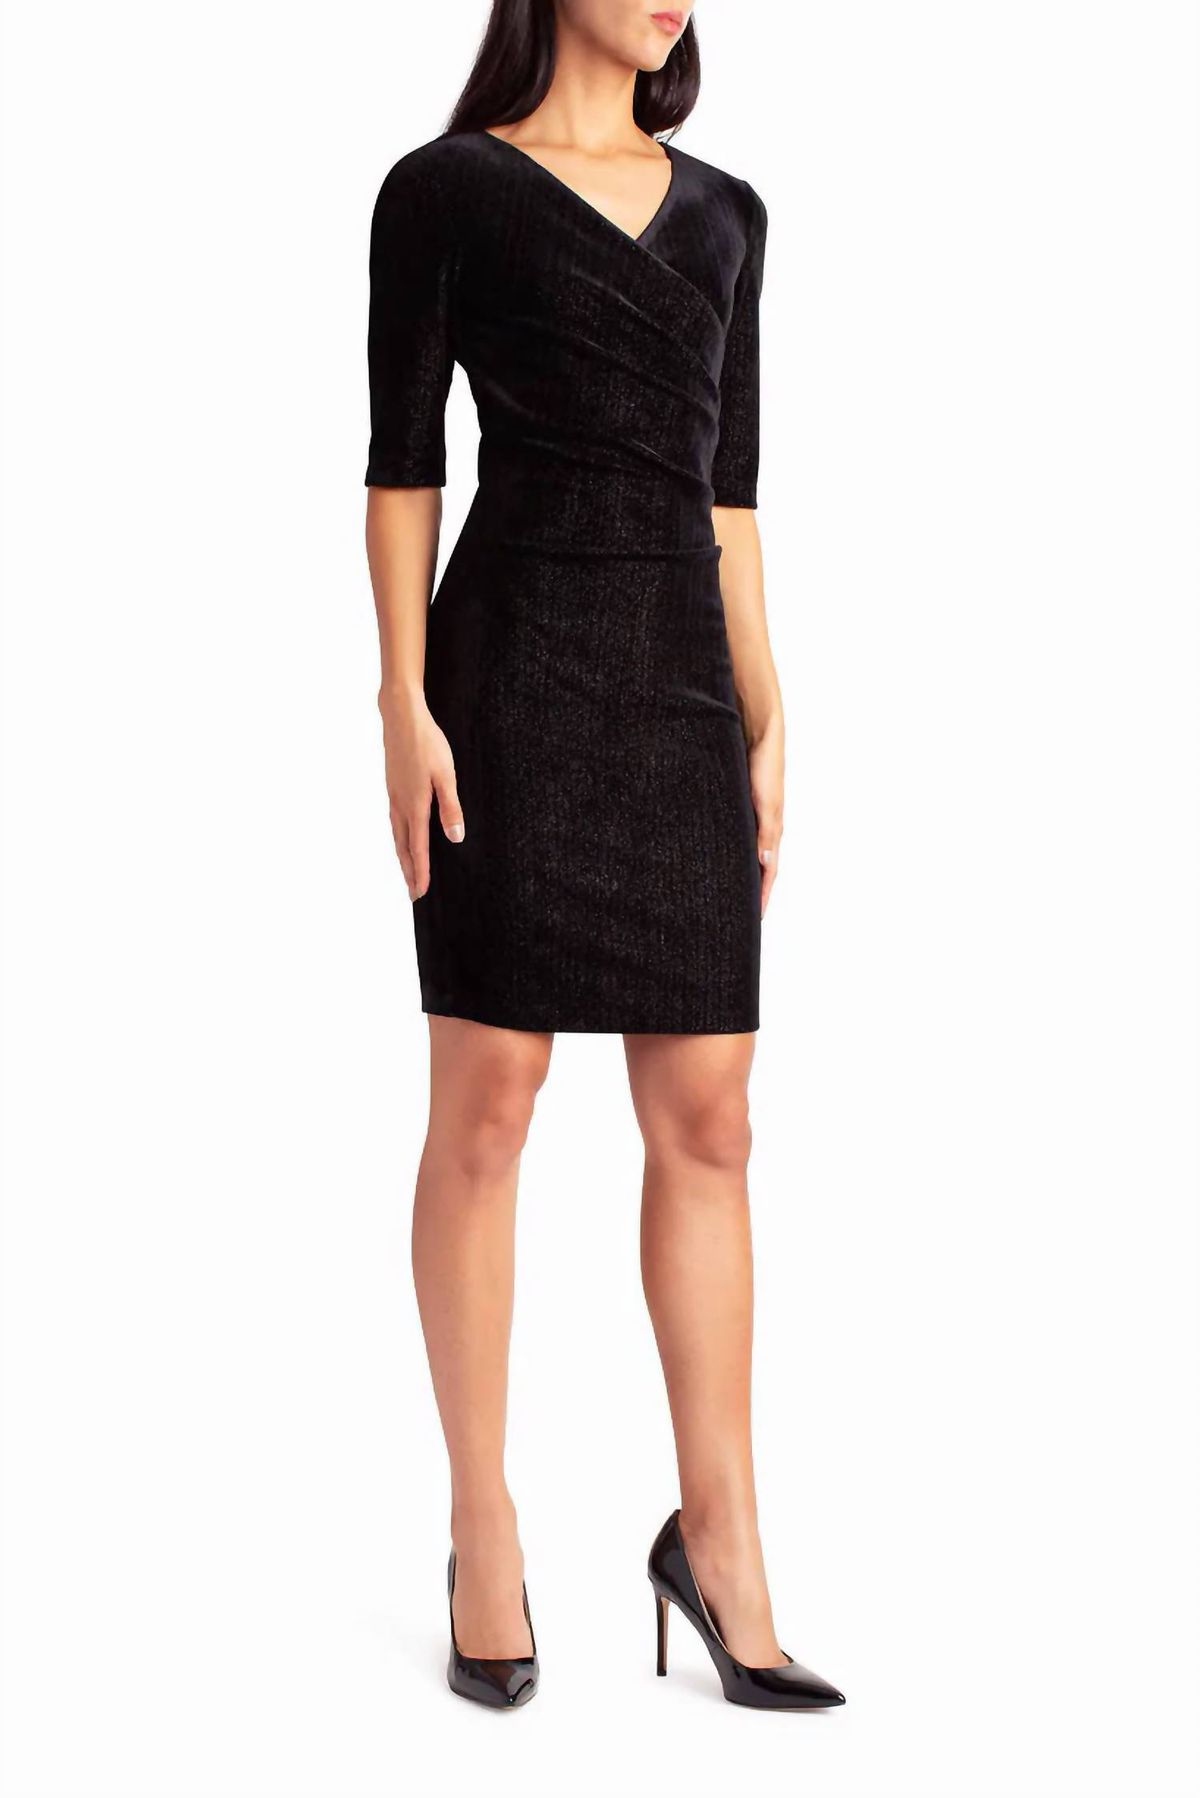 Style 1-1212724845-98 Nicole Miller Size 10 Velvet Black Cocktail Dress on Queenly